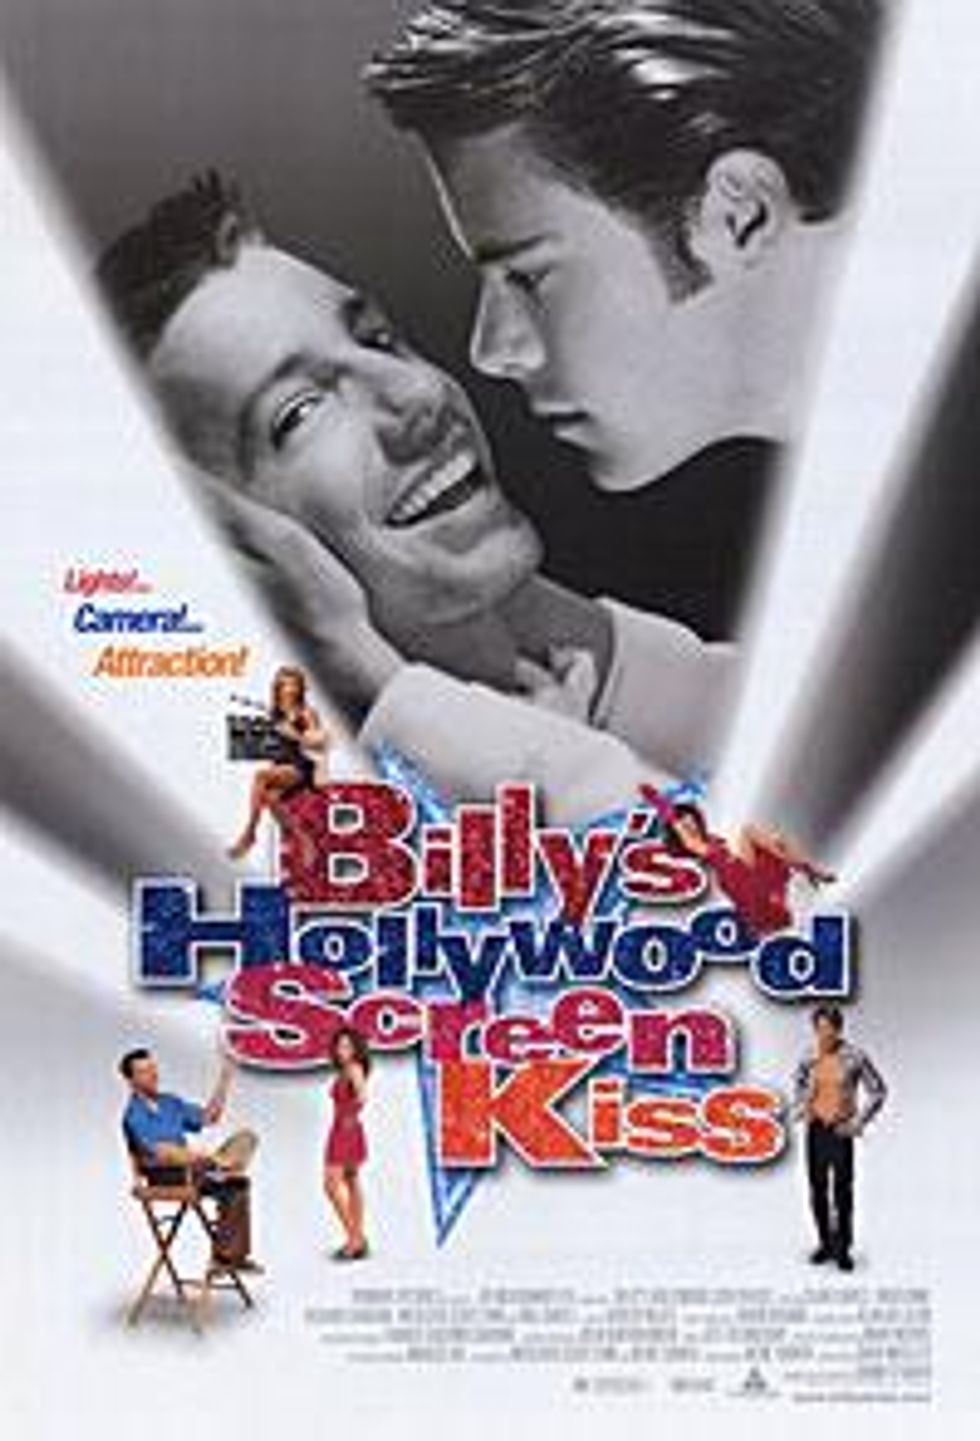 Billys-hollywood-screen-kissx200_0_0